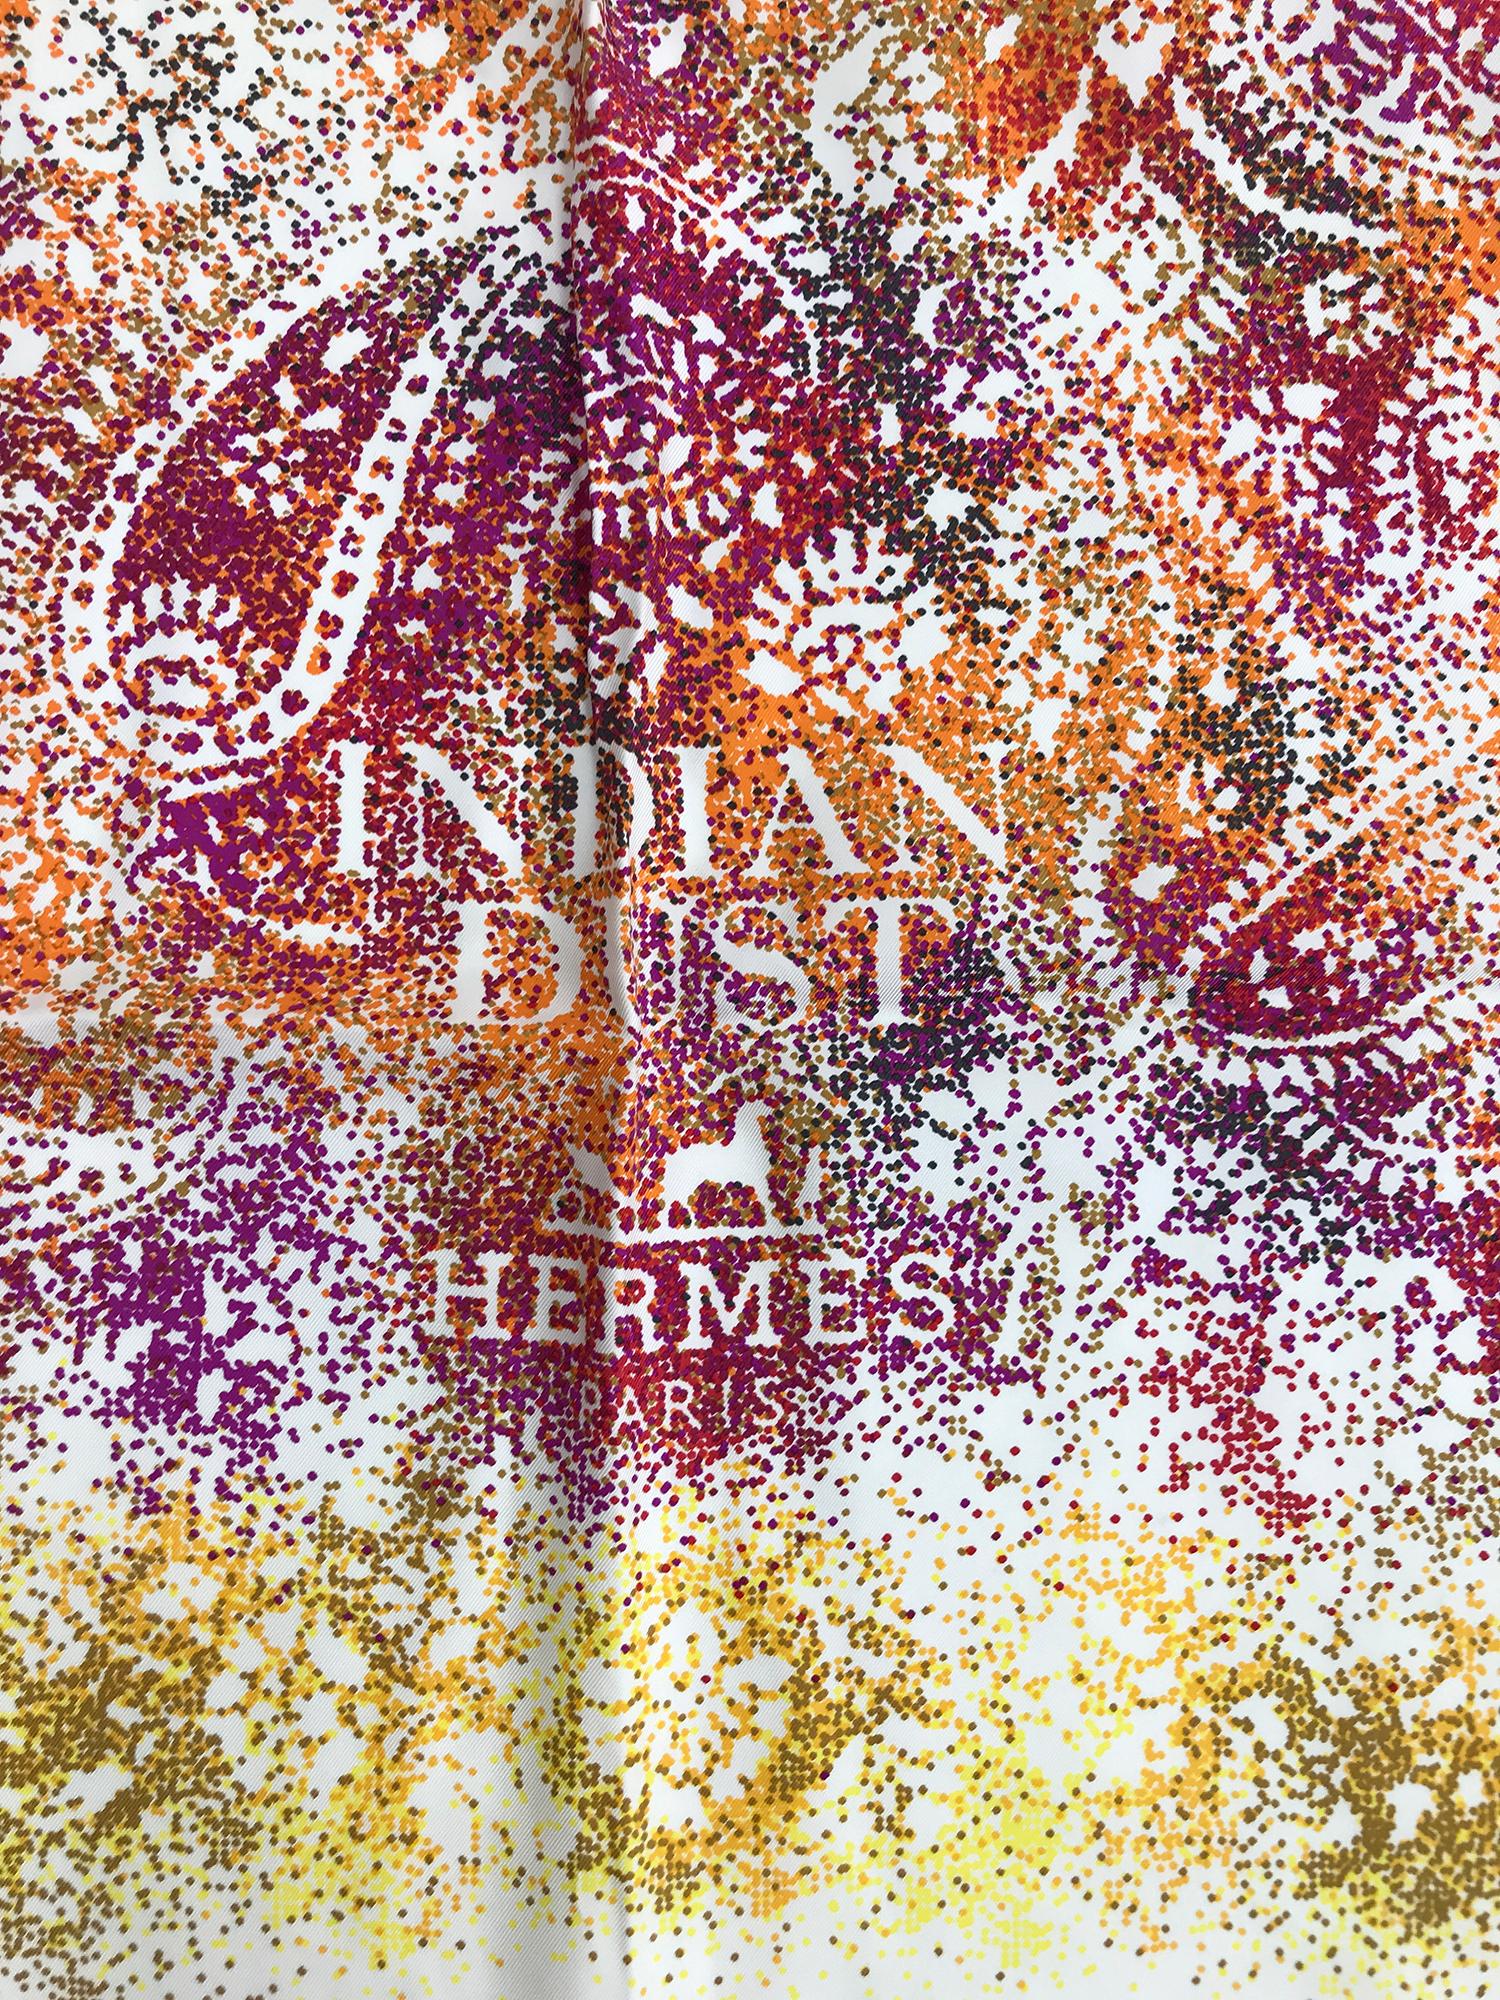 Hermes Indian Dust silk twill scarf by Benoit Pierre Emery 36